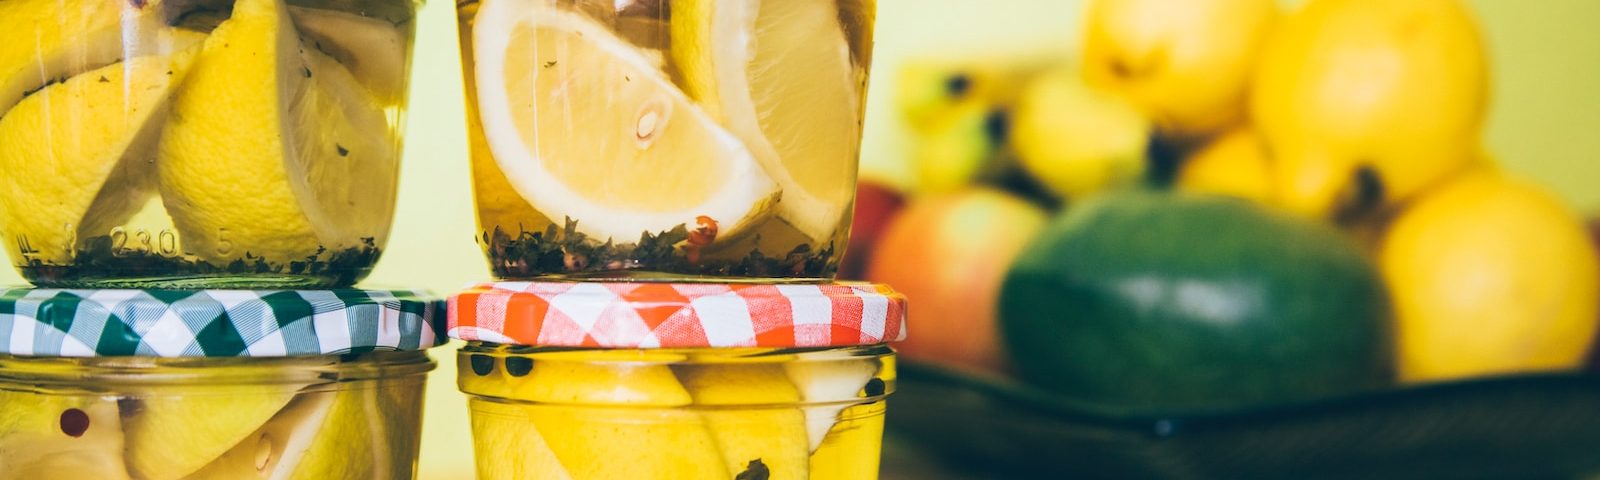 lemon inside jars